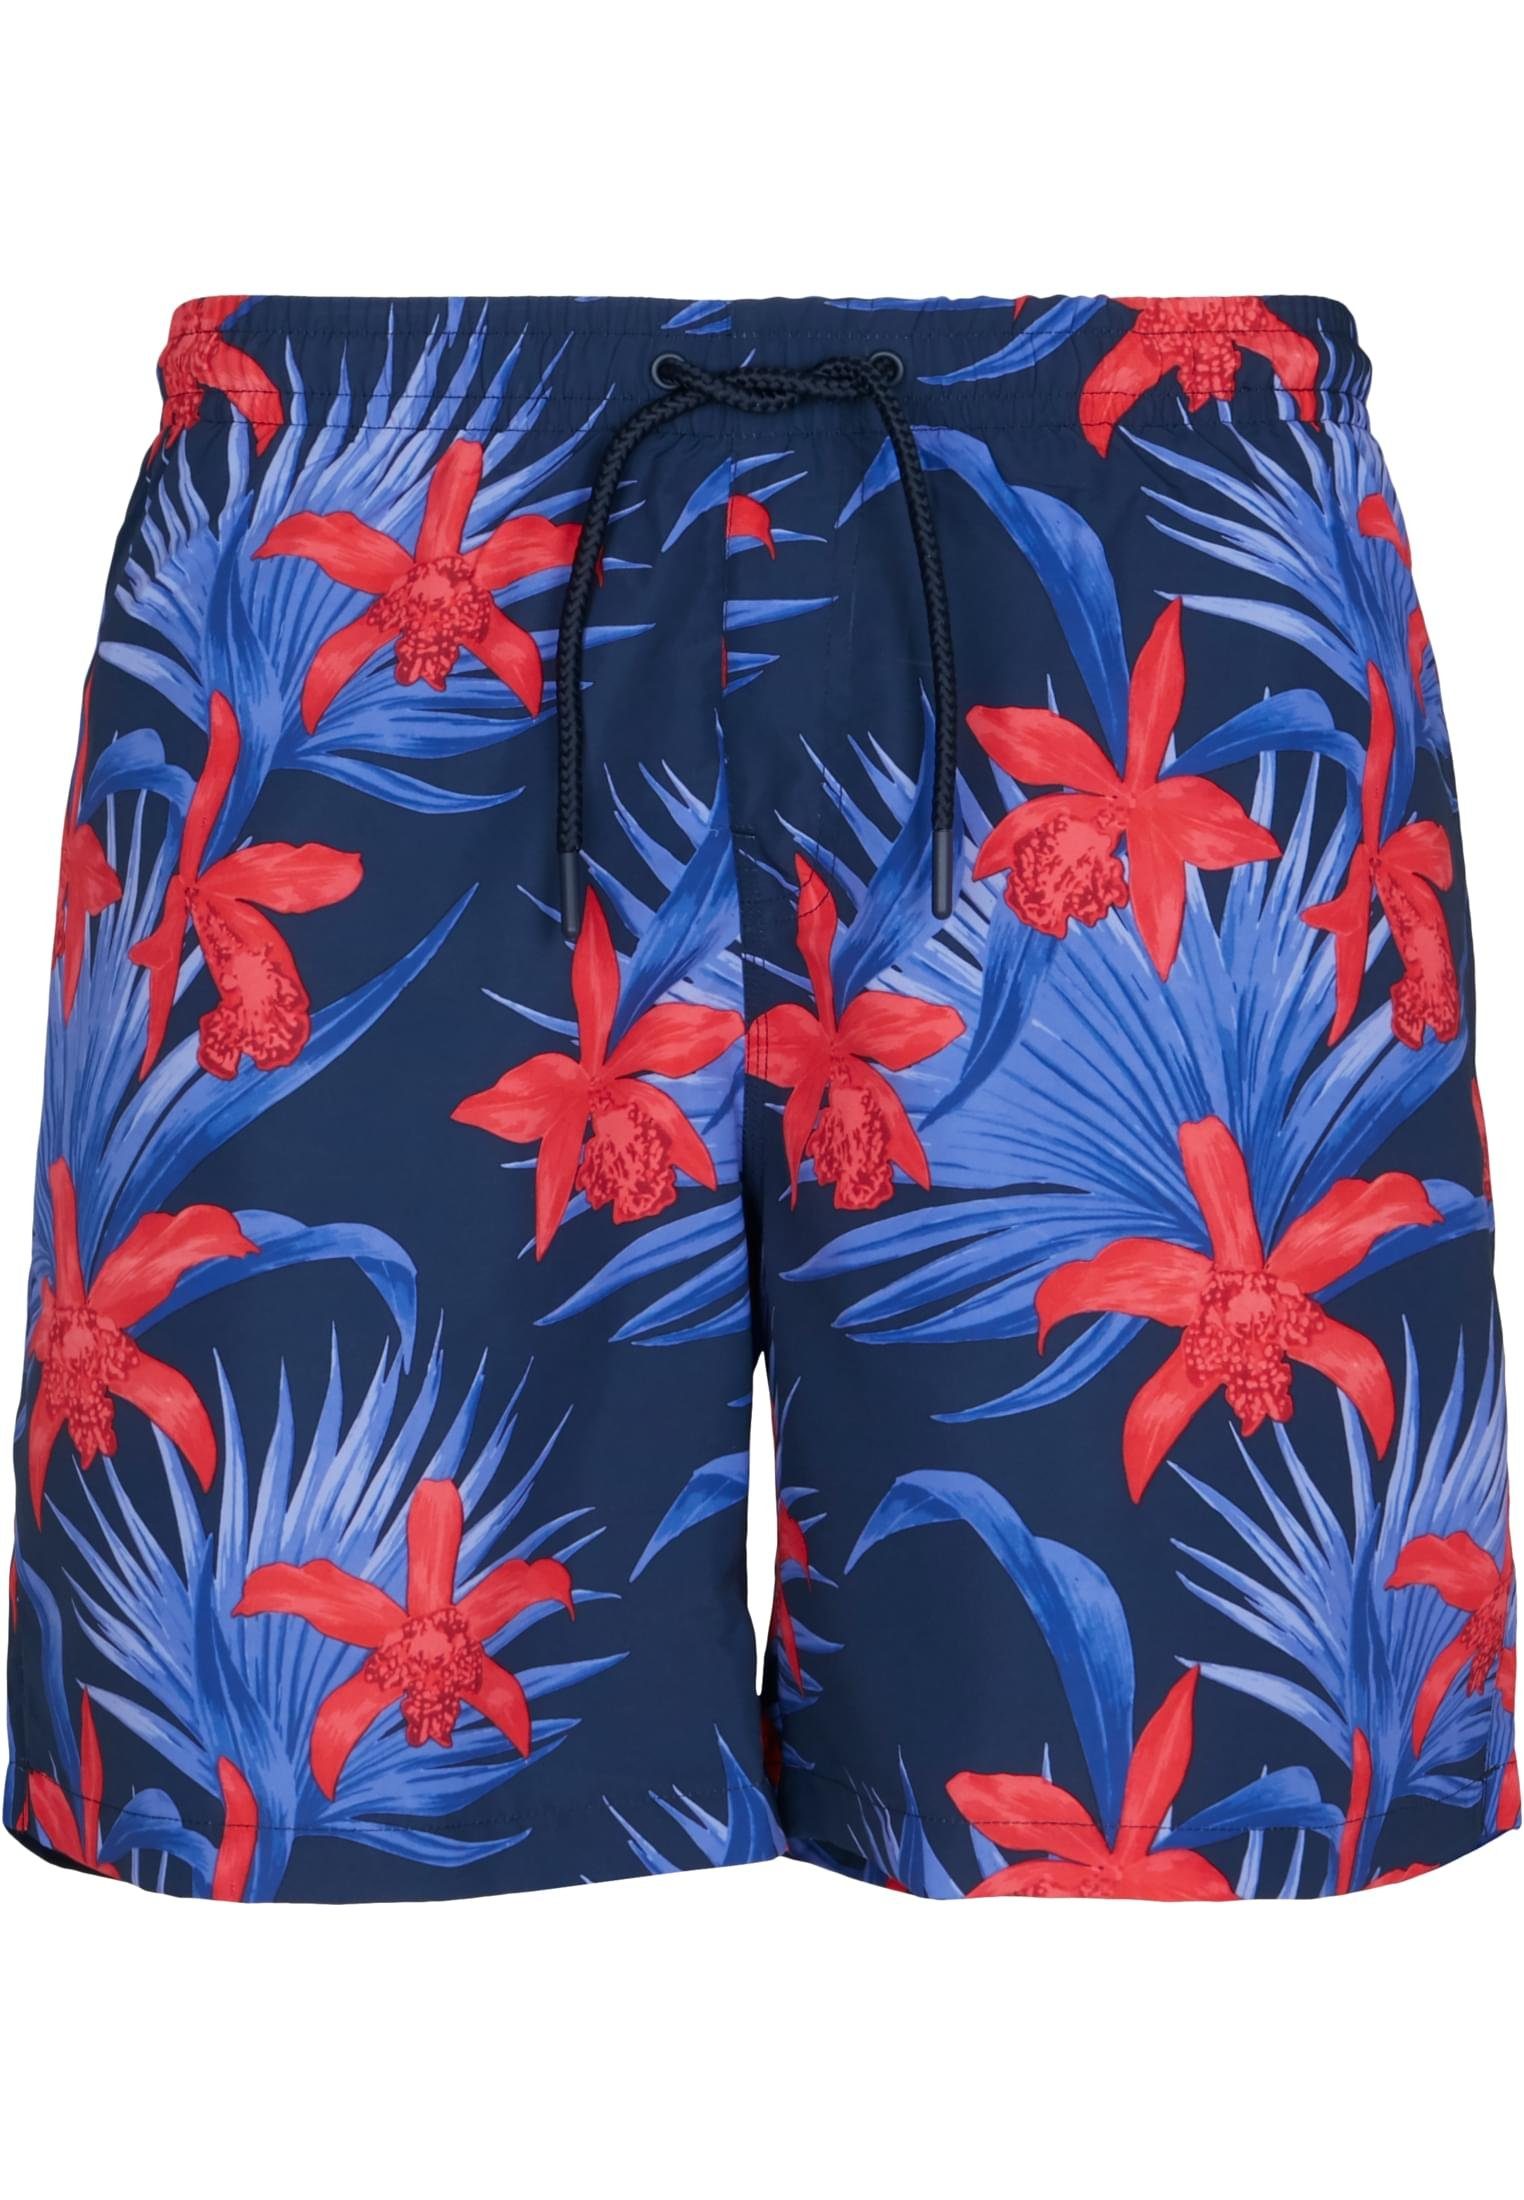 Pattern blue/red CLASSICS Swim Herren URBAN Shorts Badeshorts